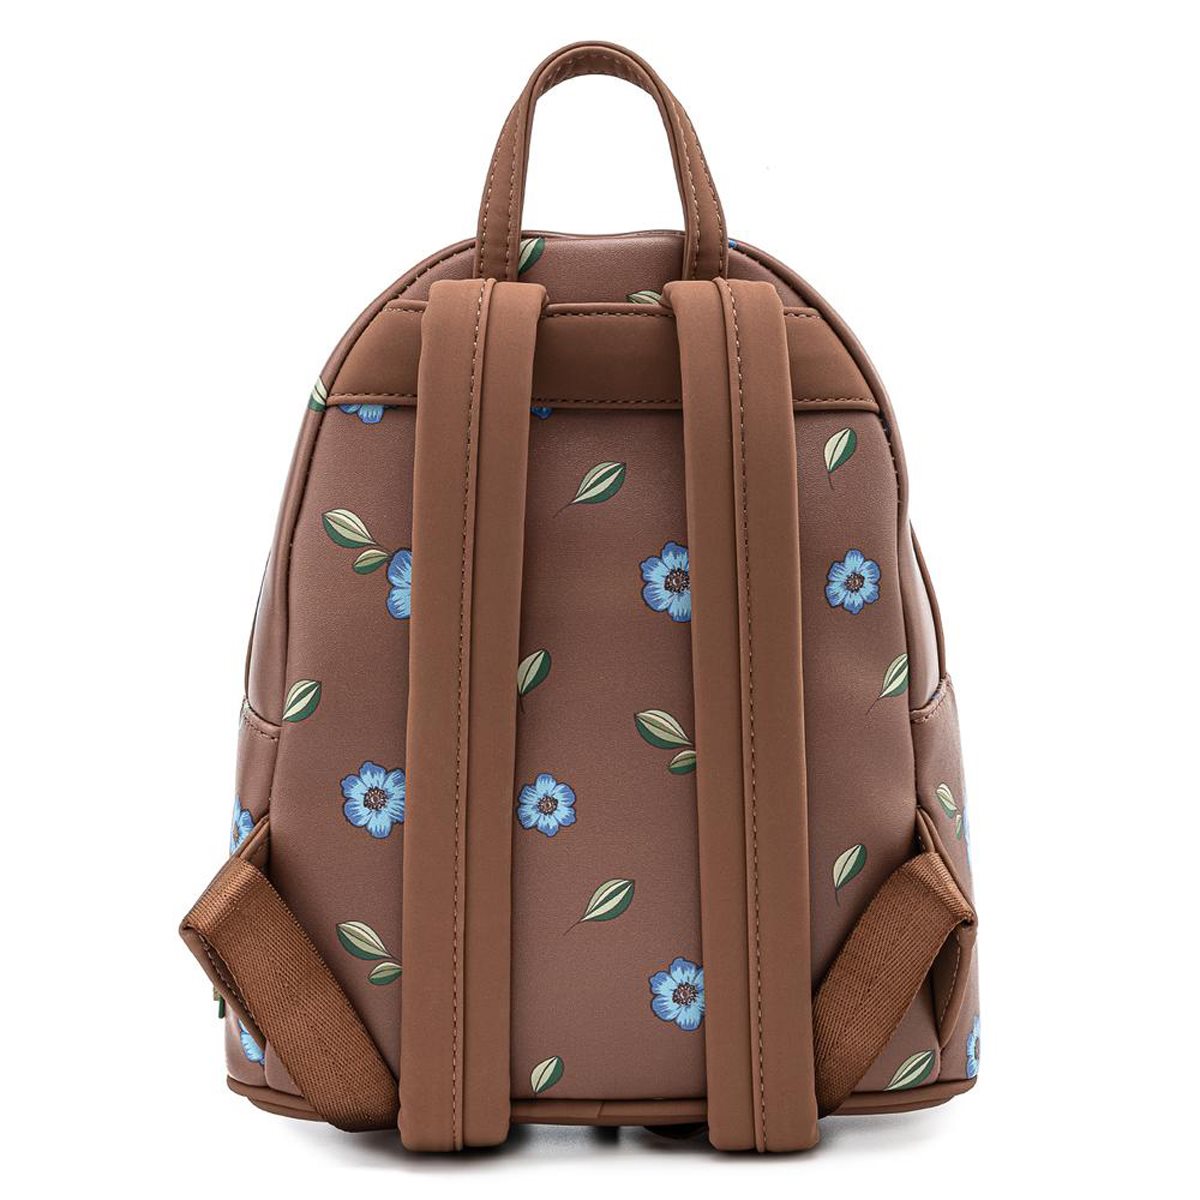 Glamfox - Brown Checker Mini Backpack